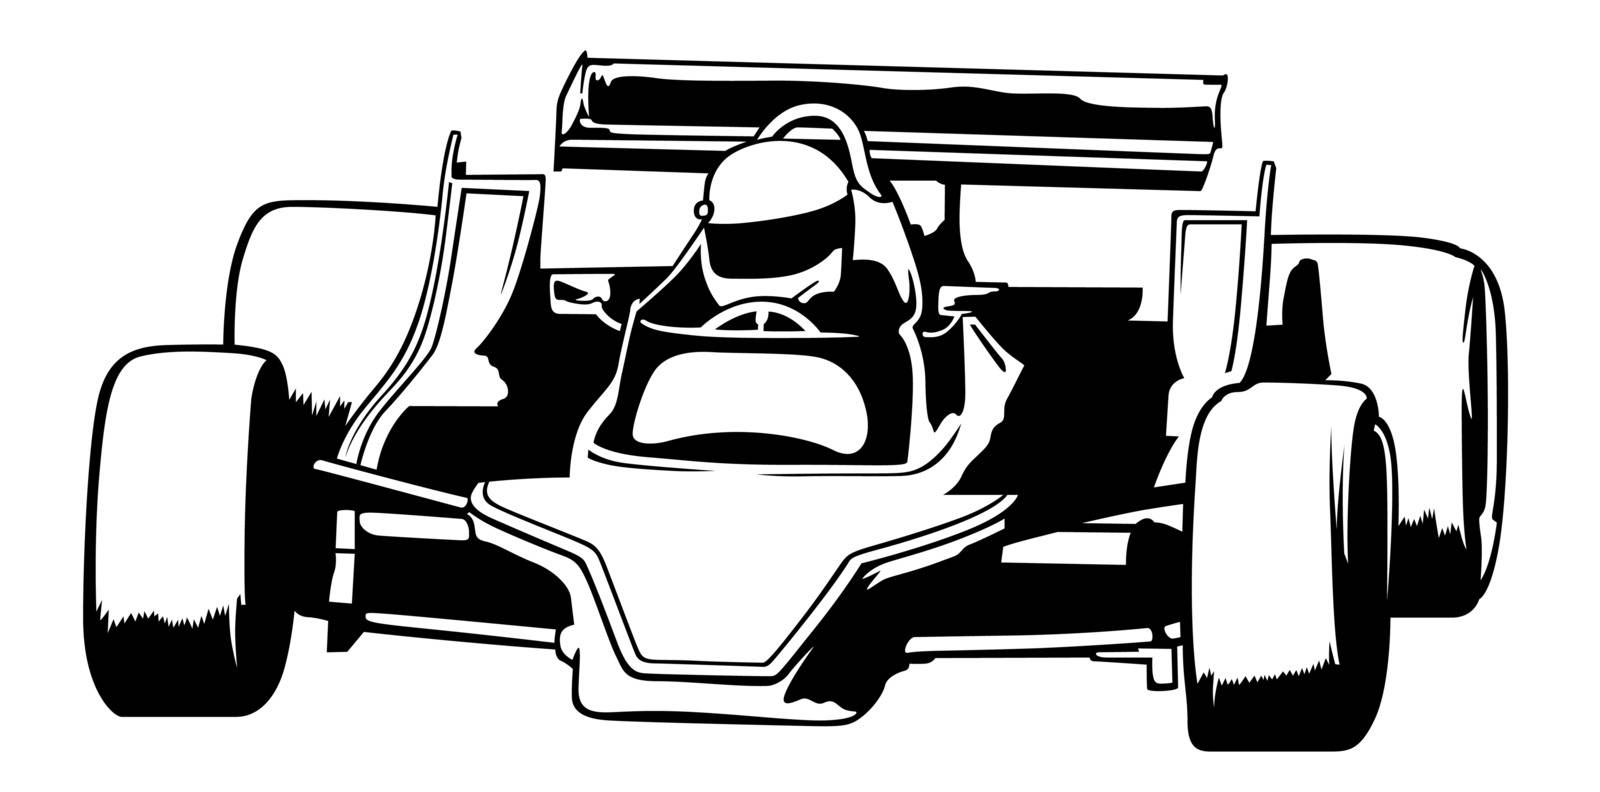 Racing Car by illustratorCZ